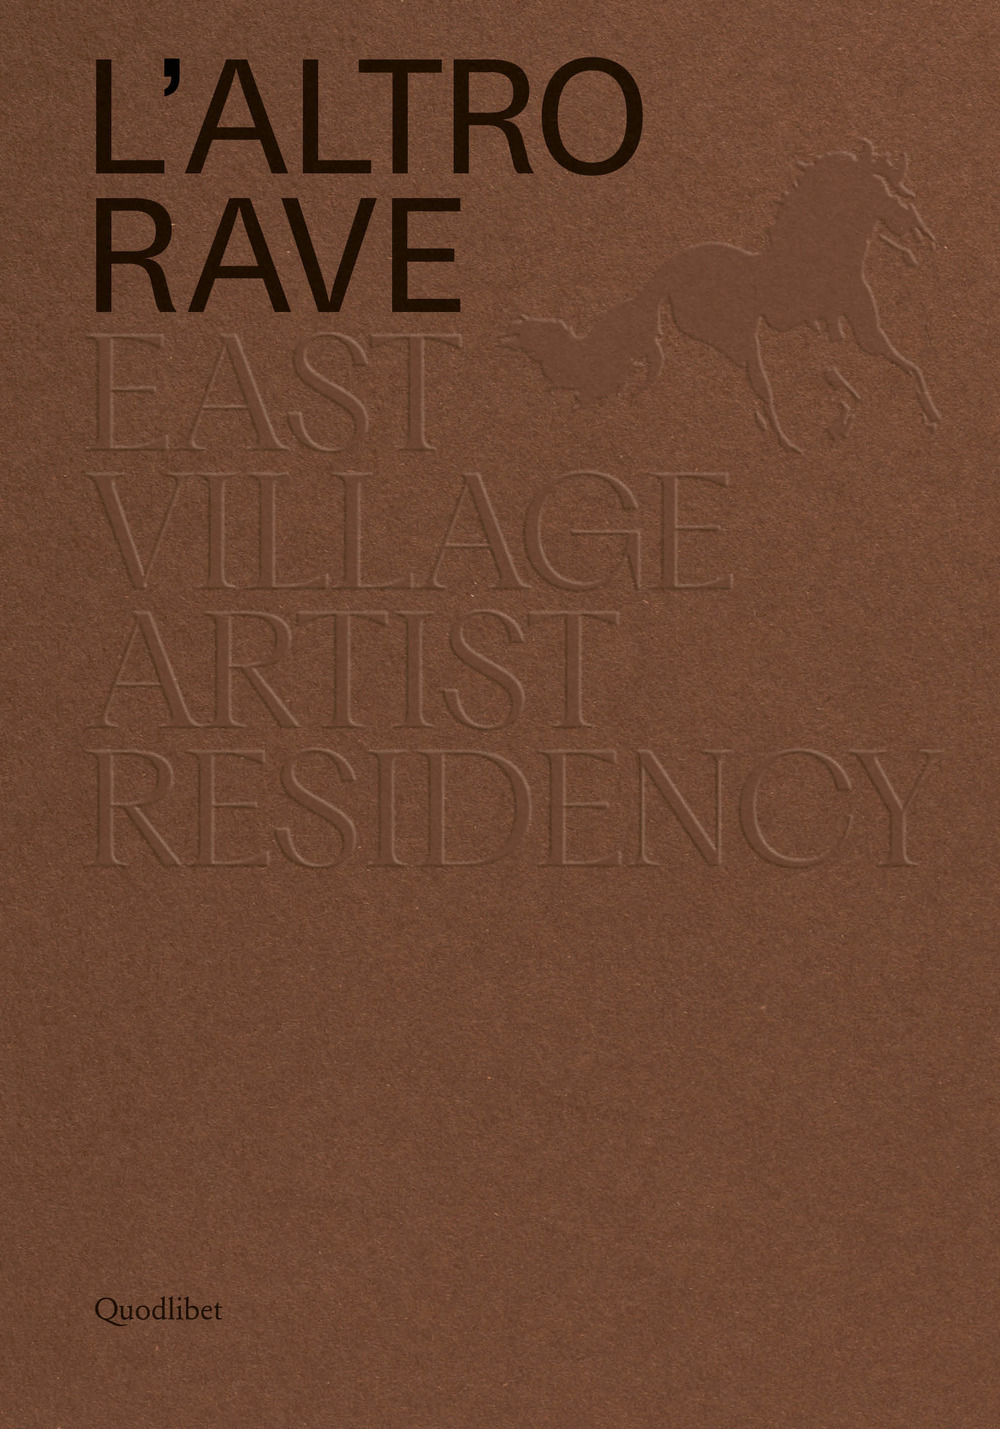 L'altro RAVE. East Village Artist Residency. Ediz. italiana e inglese